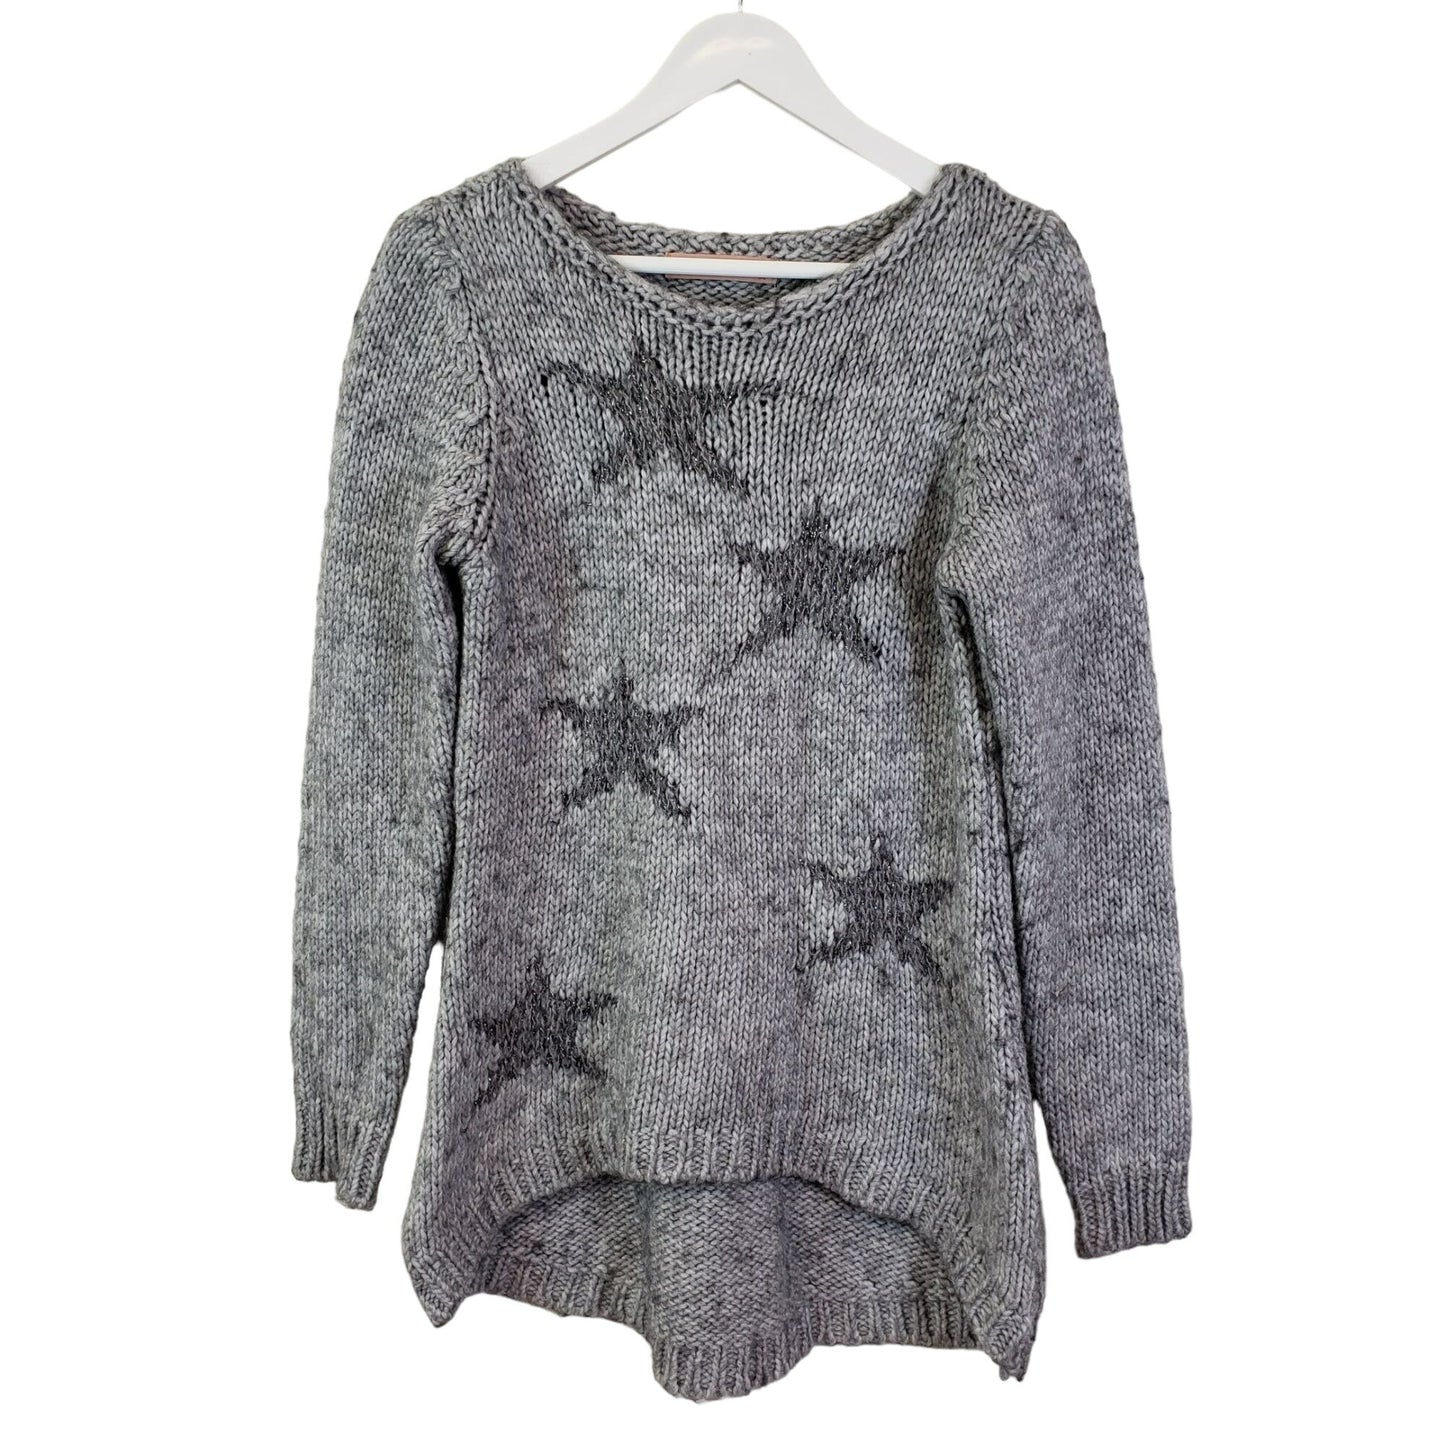 Elsamanda Wool & Alpaca Blend Star Print Sweater Size Large